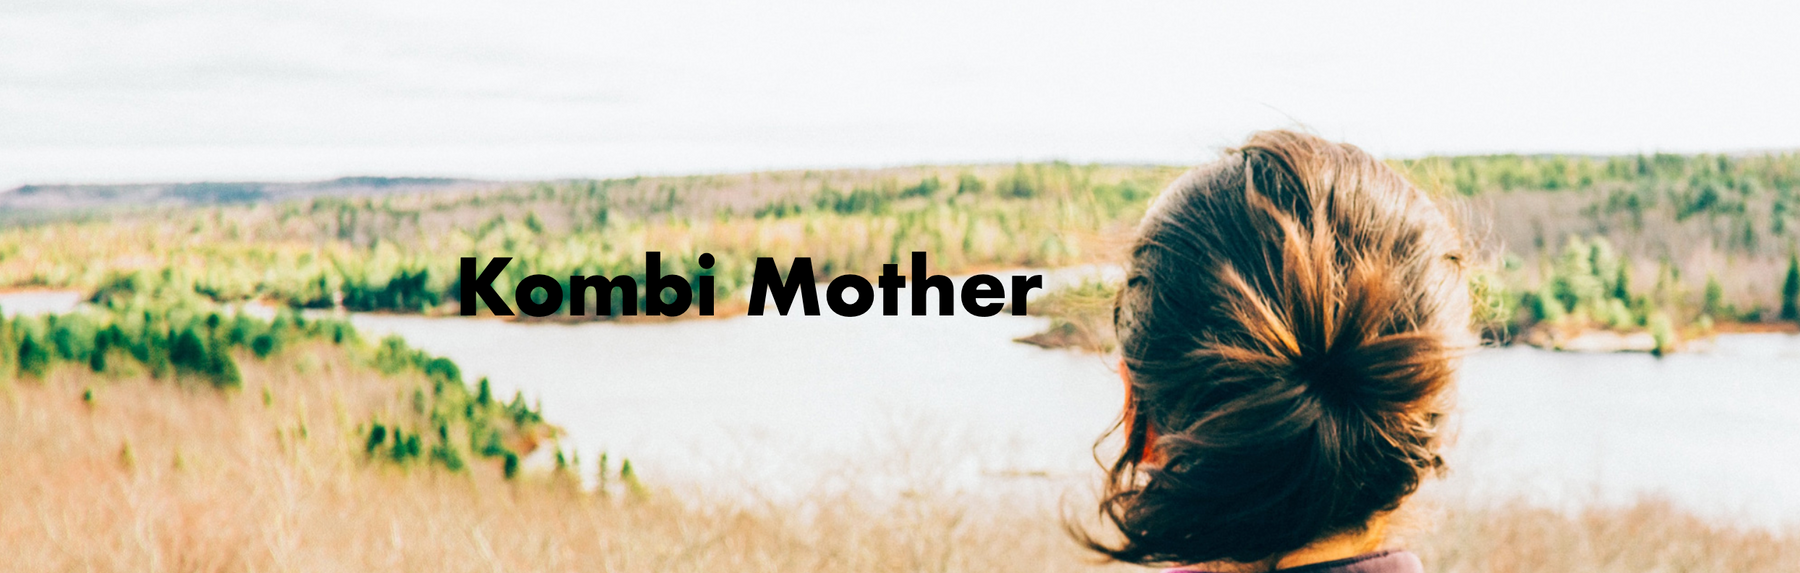 Kombi Mother